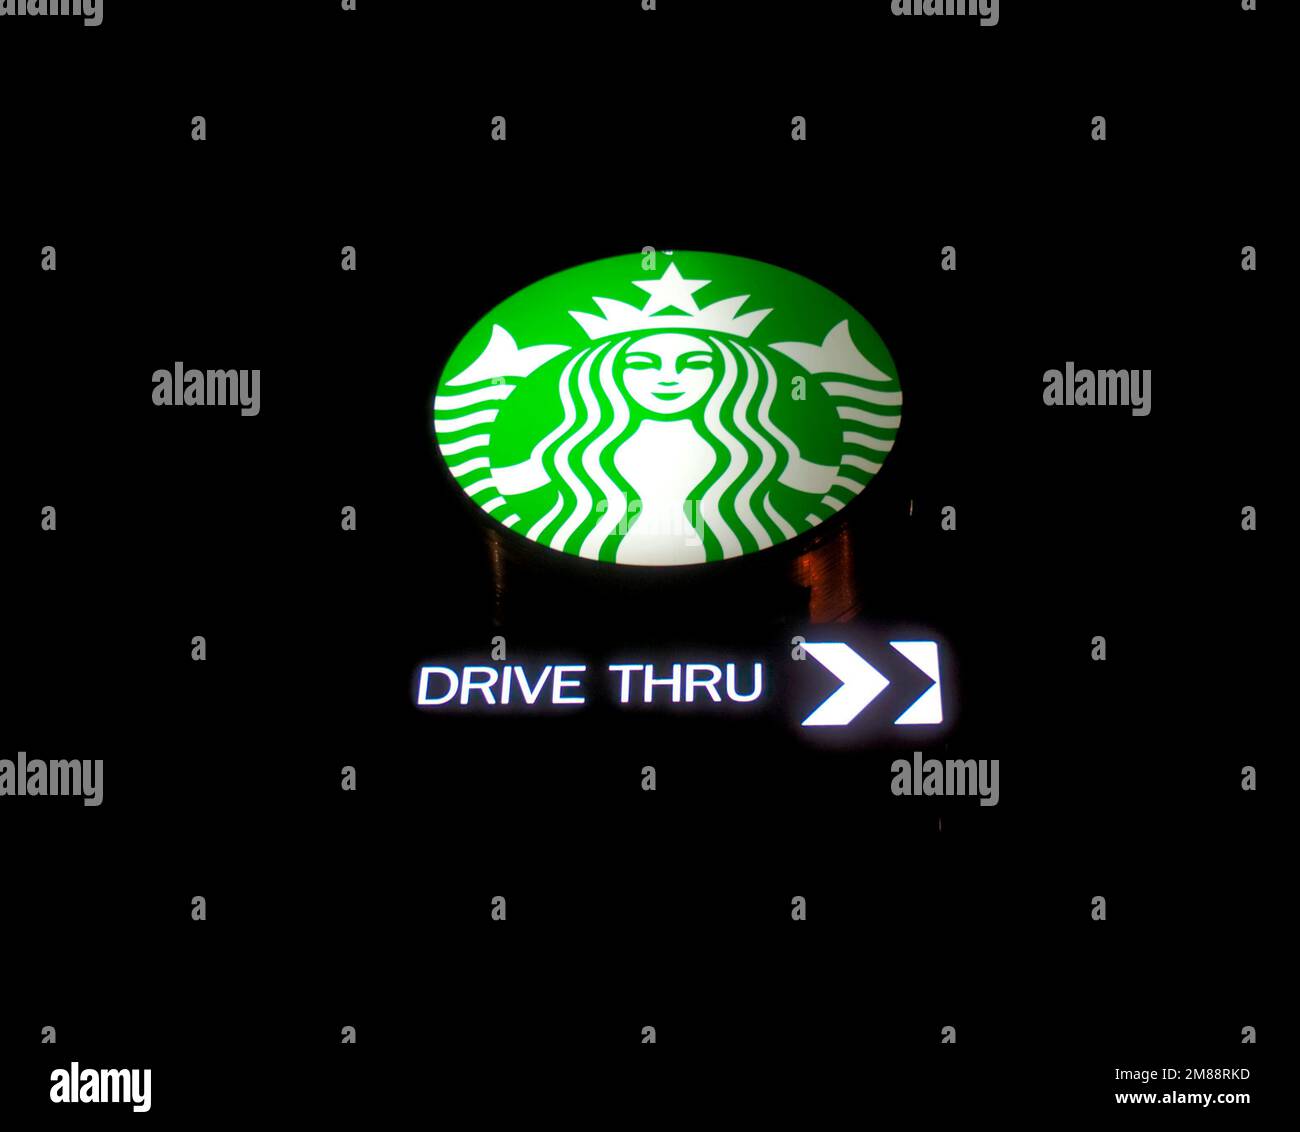 Starbucks logo drive thru Stock Photo